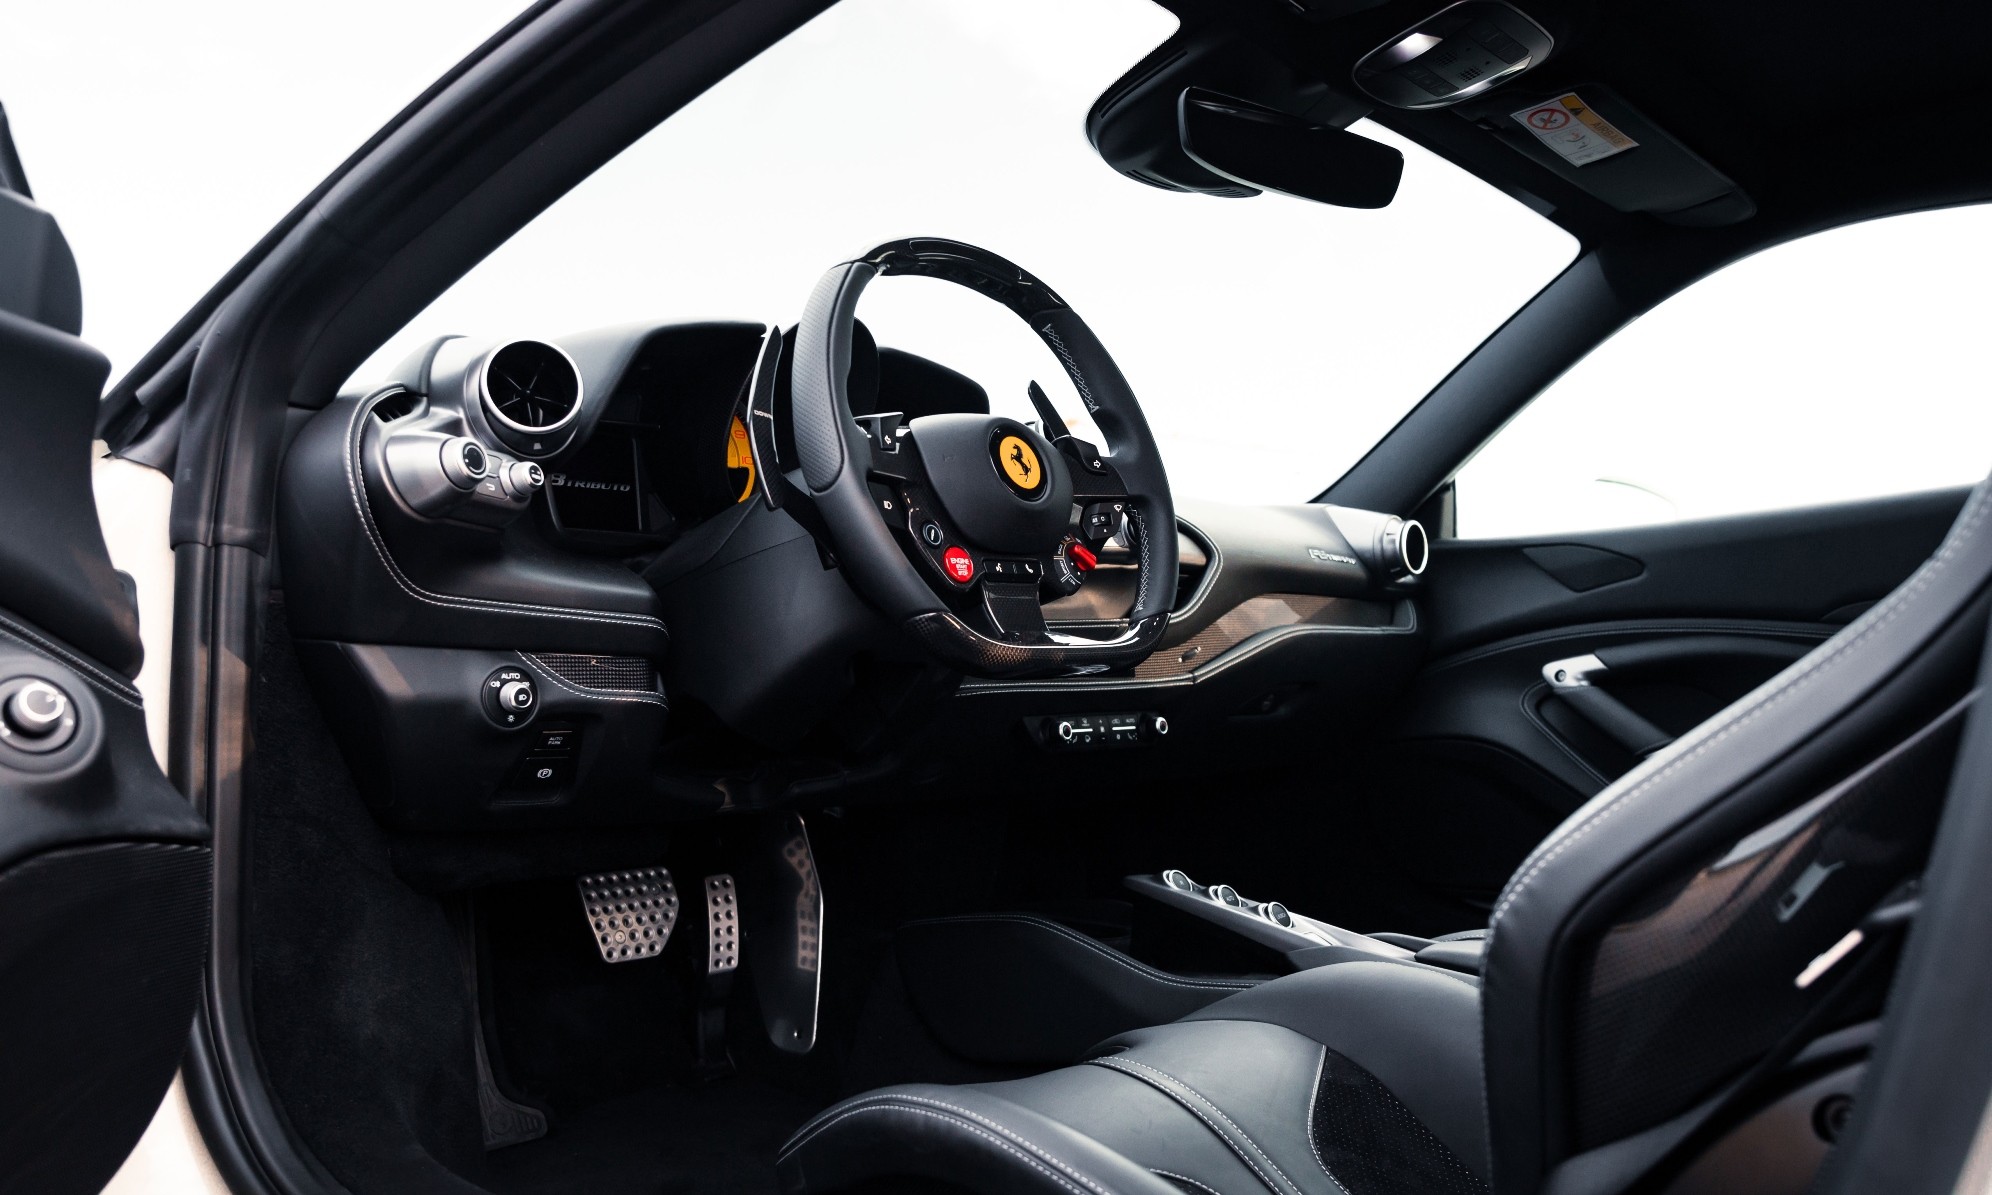 Novitec Ferrari F8 Tributo interior